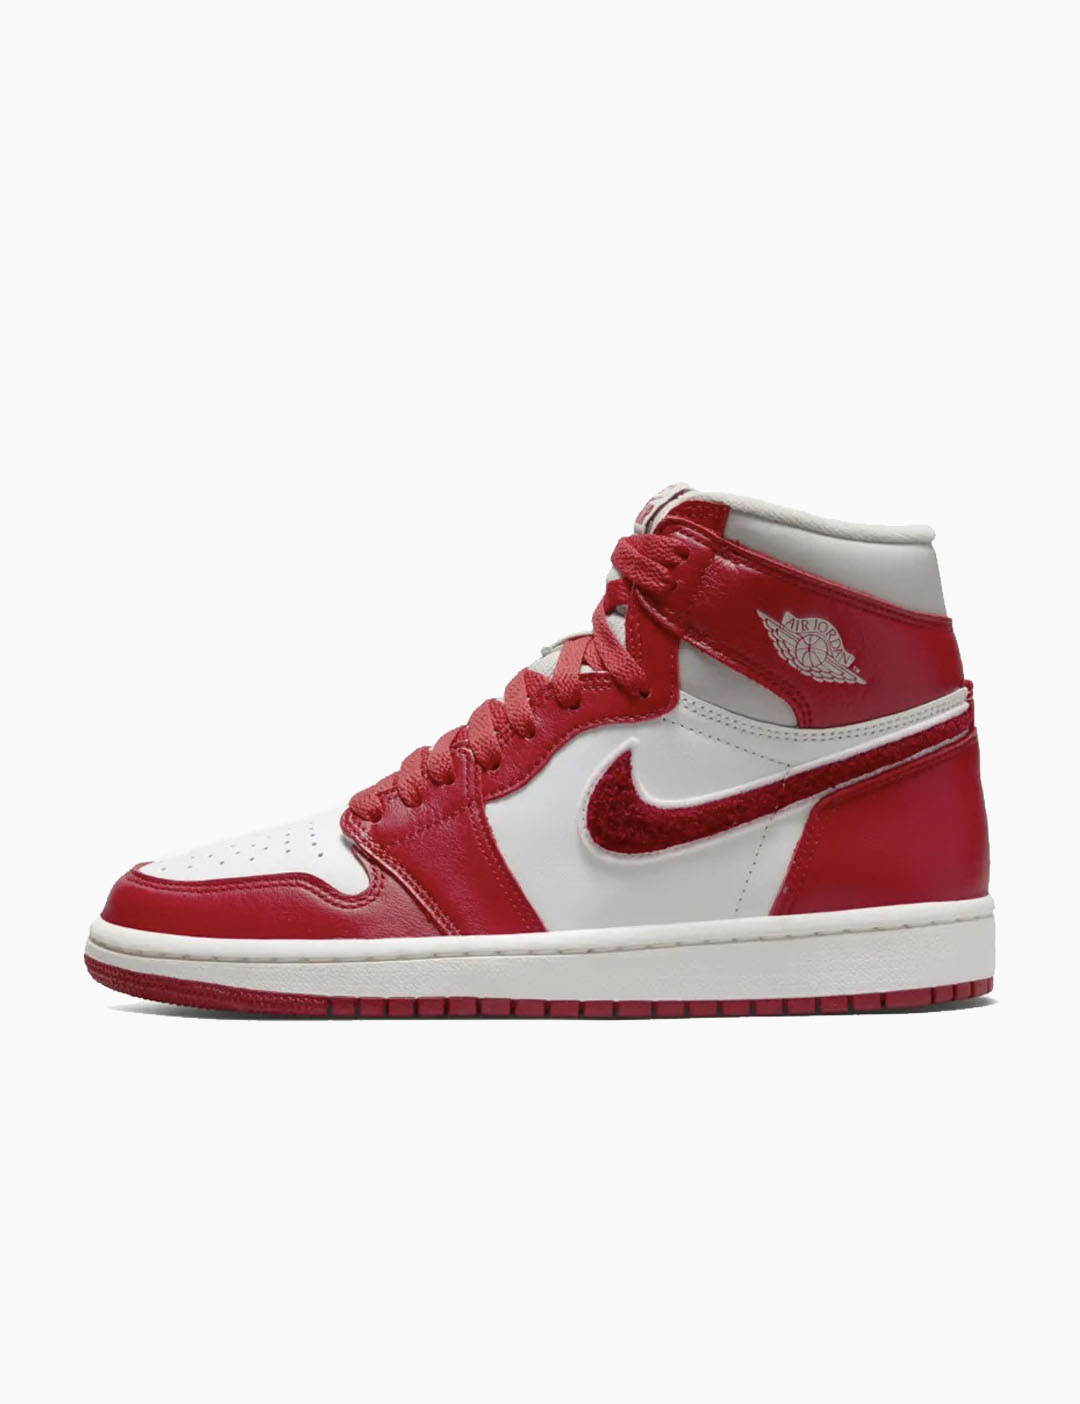 A Good Look At The Air Jordan 1 High Red Un-Supreme •